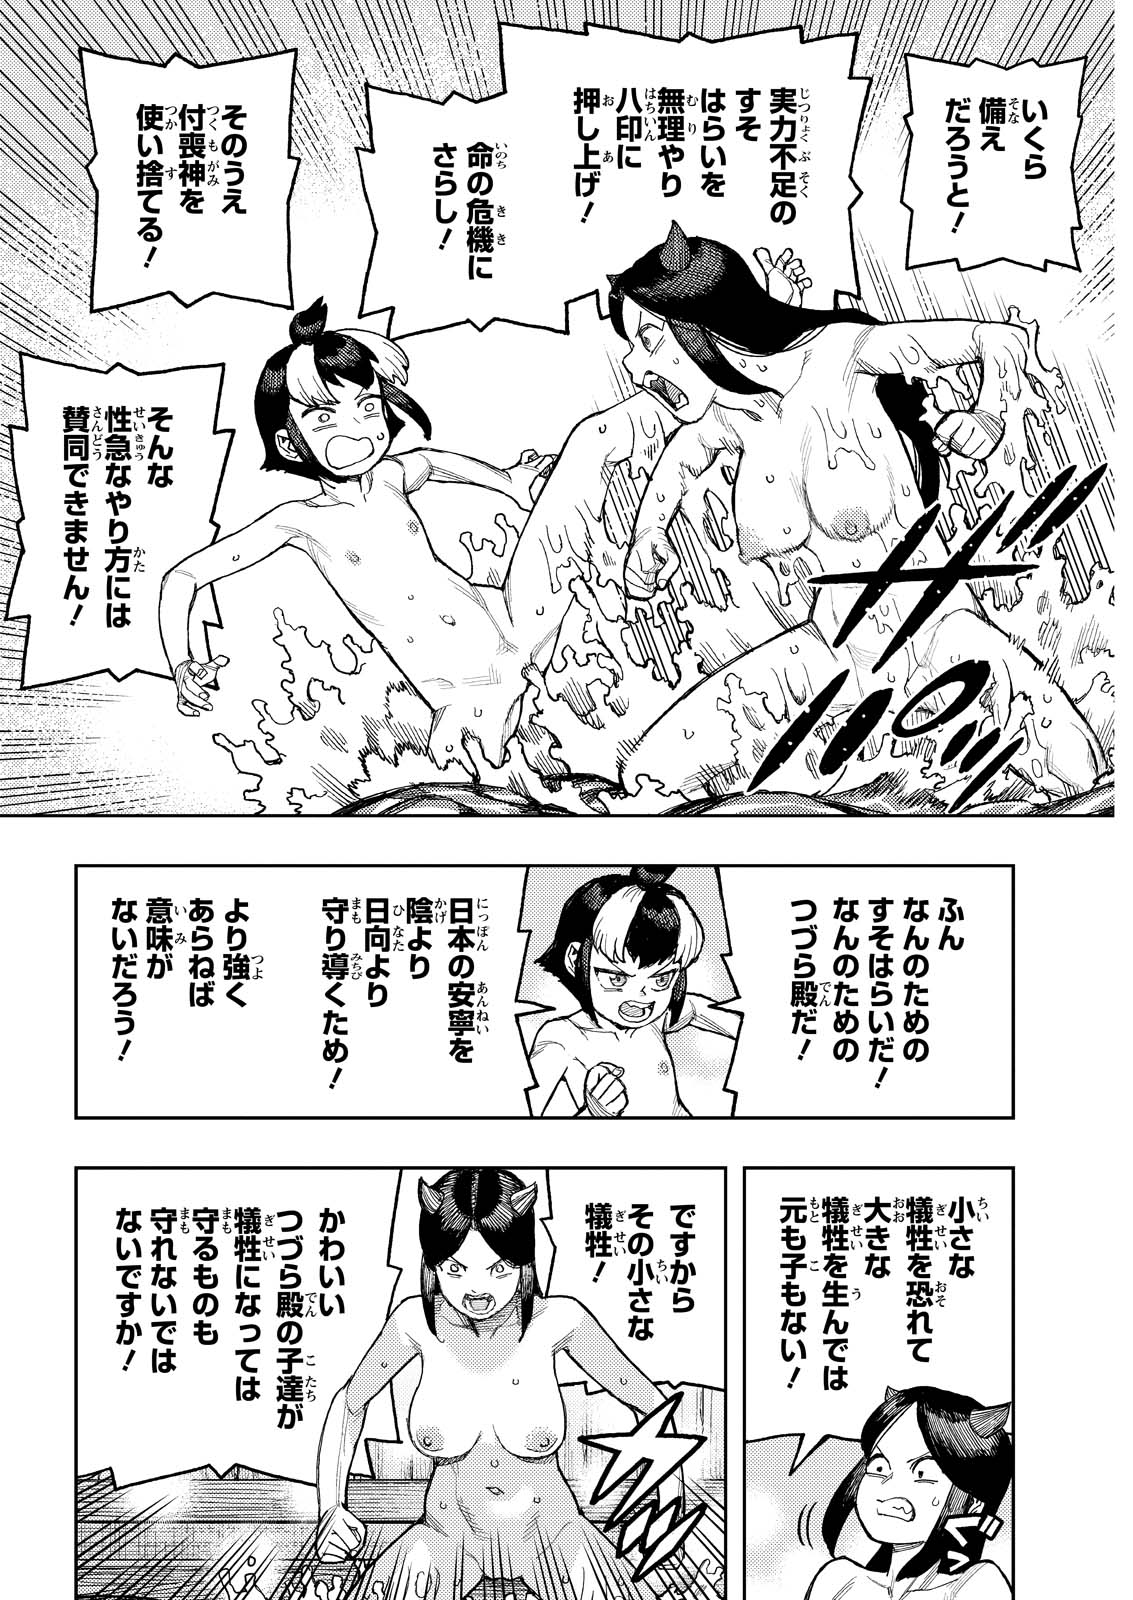 Tsugumomo - Chapter 167 - Page 12